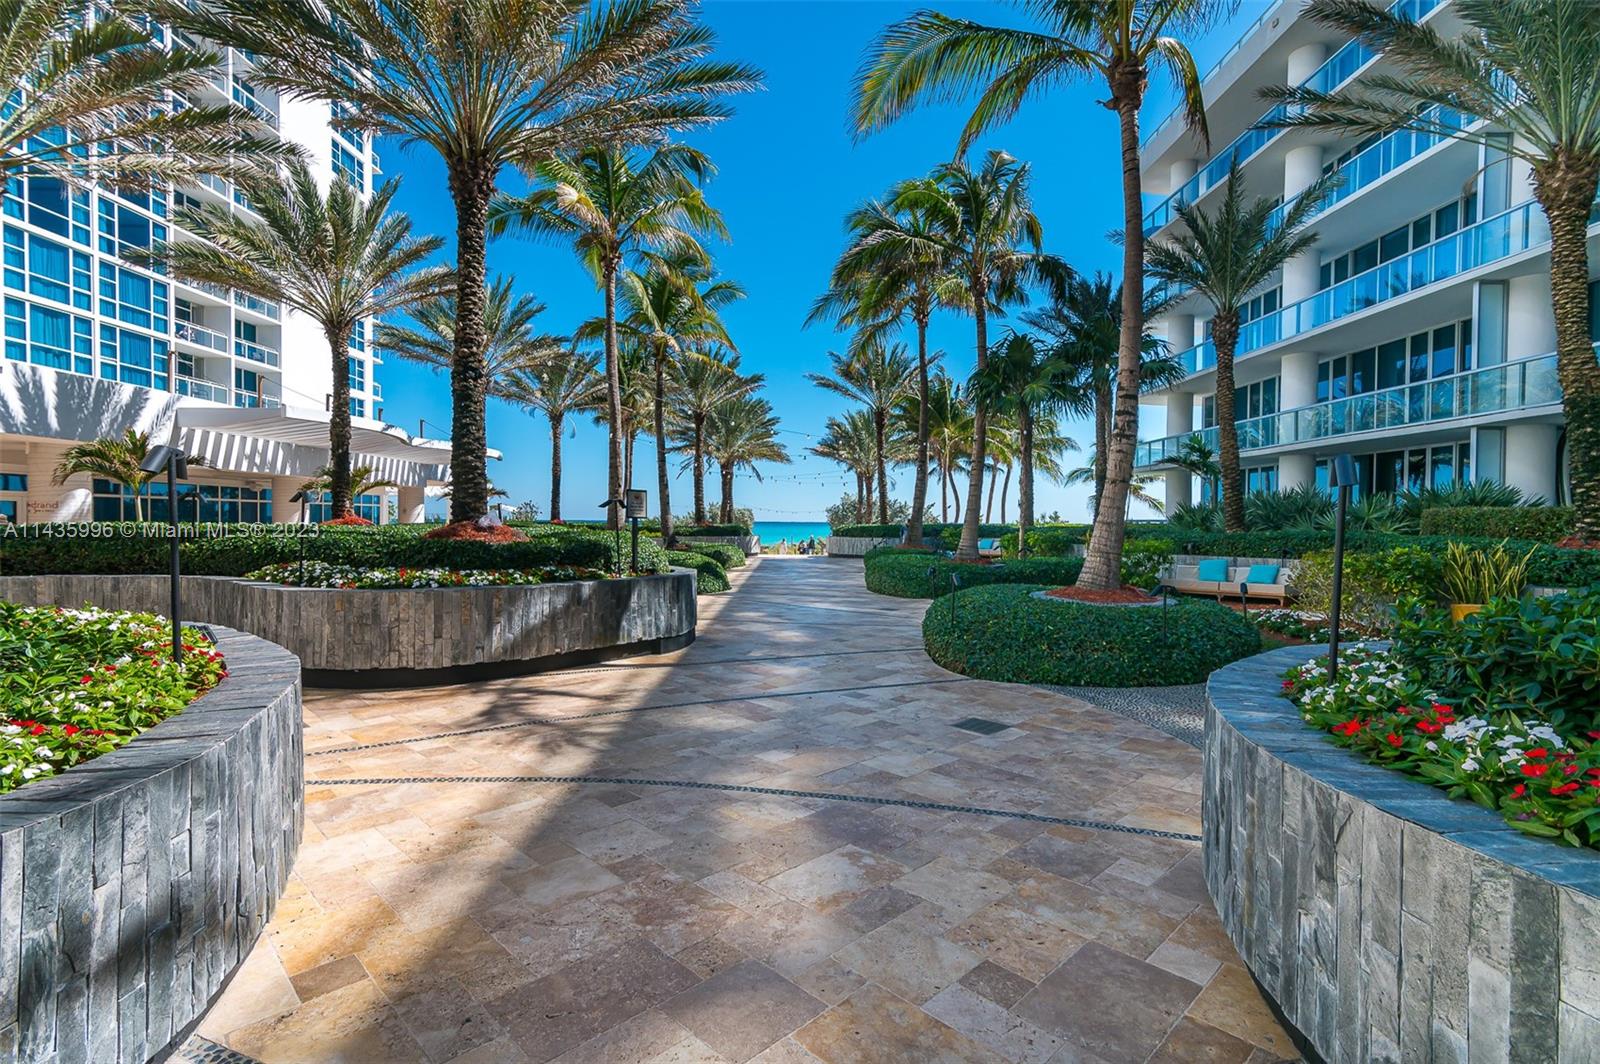 Photo 16 of Carillon Miami Beach Hotel Residences Apt 402 in Miami Beach - MLS A11435996